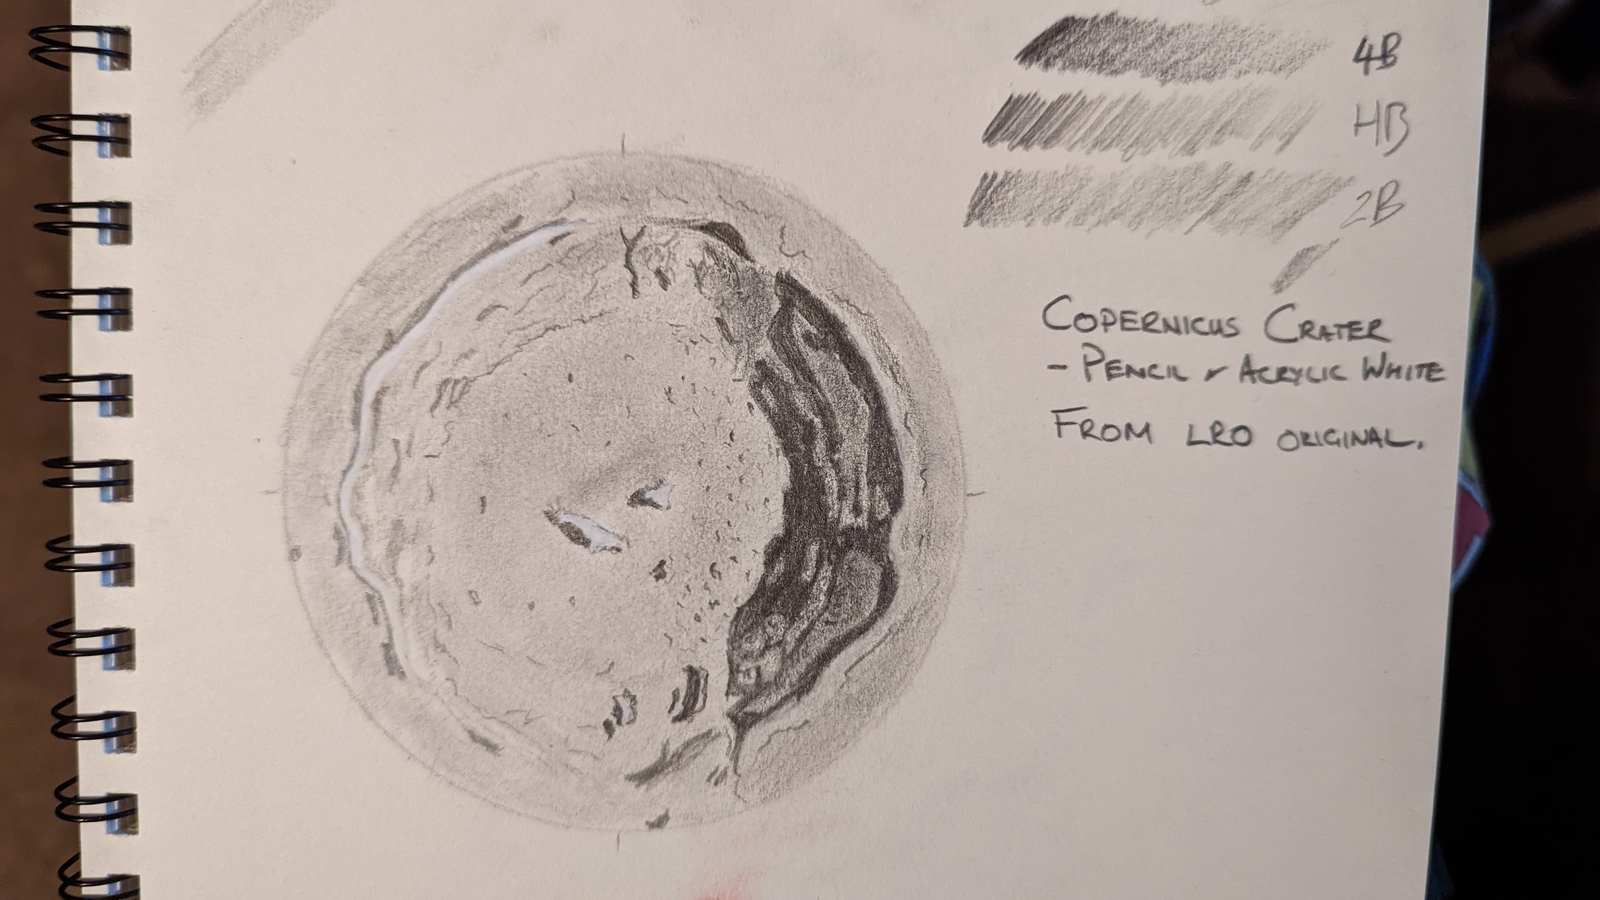 Day 5 - Copernicus Crater